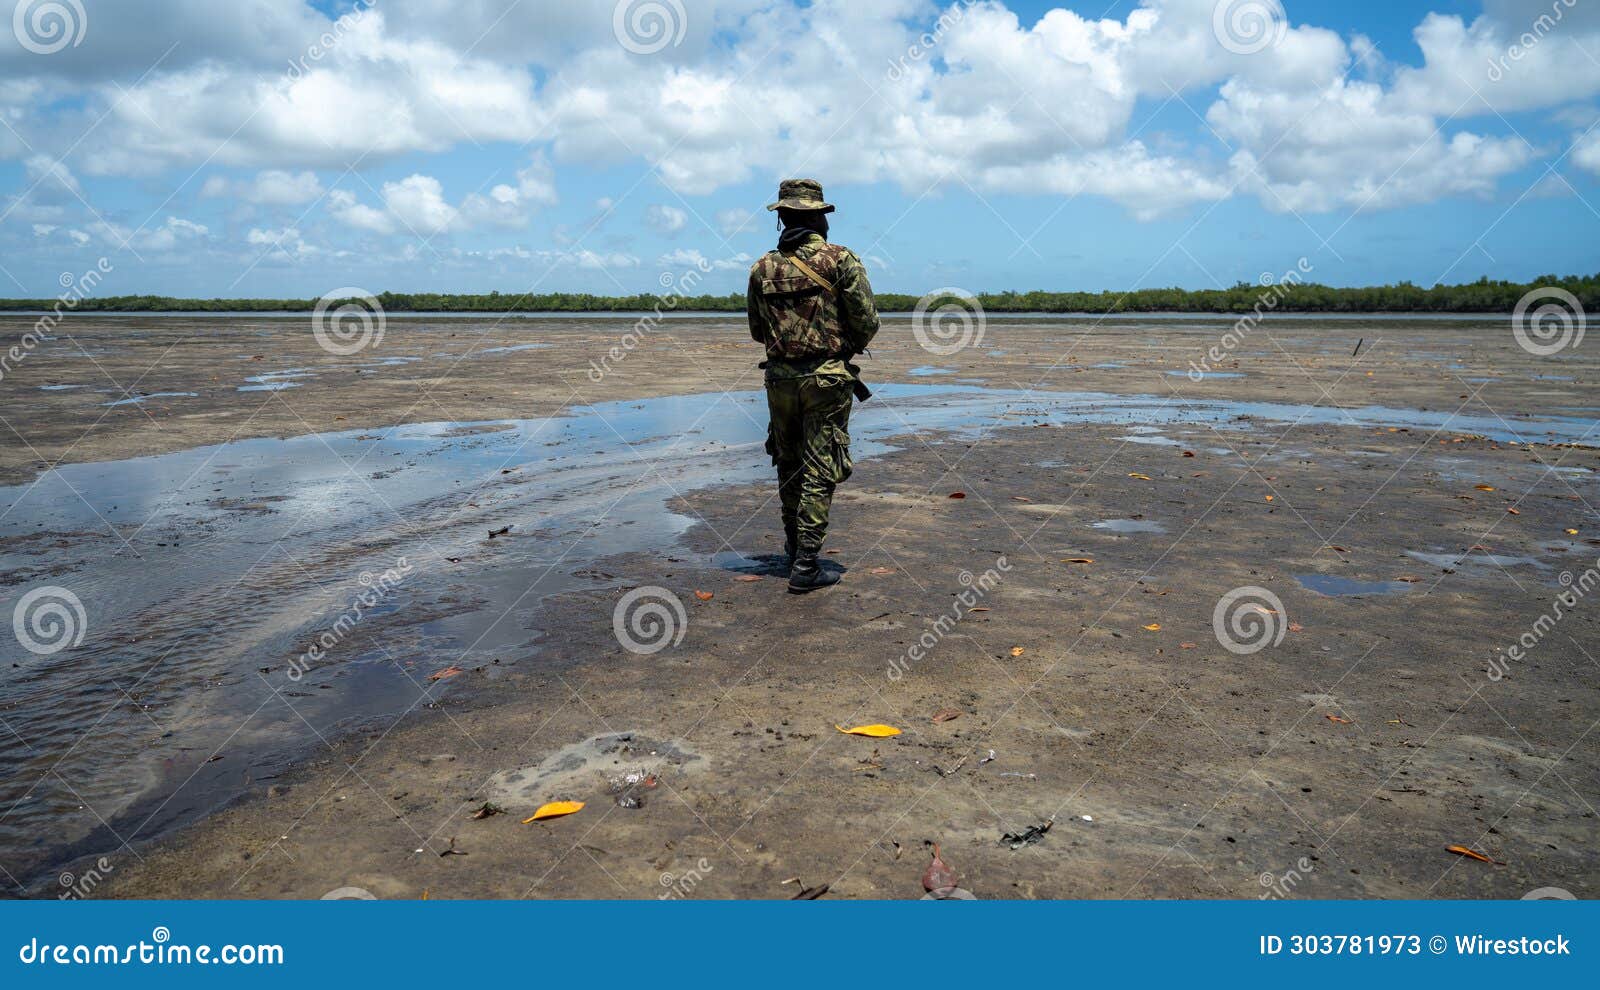 male member of the military forces in mocimboa da praia, located in the cabo delgado region